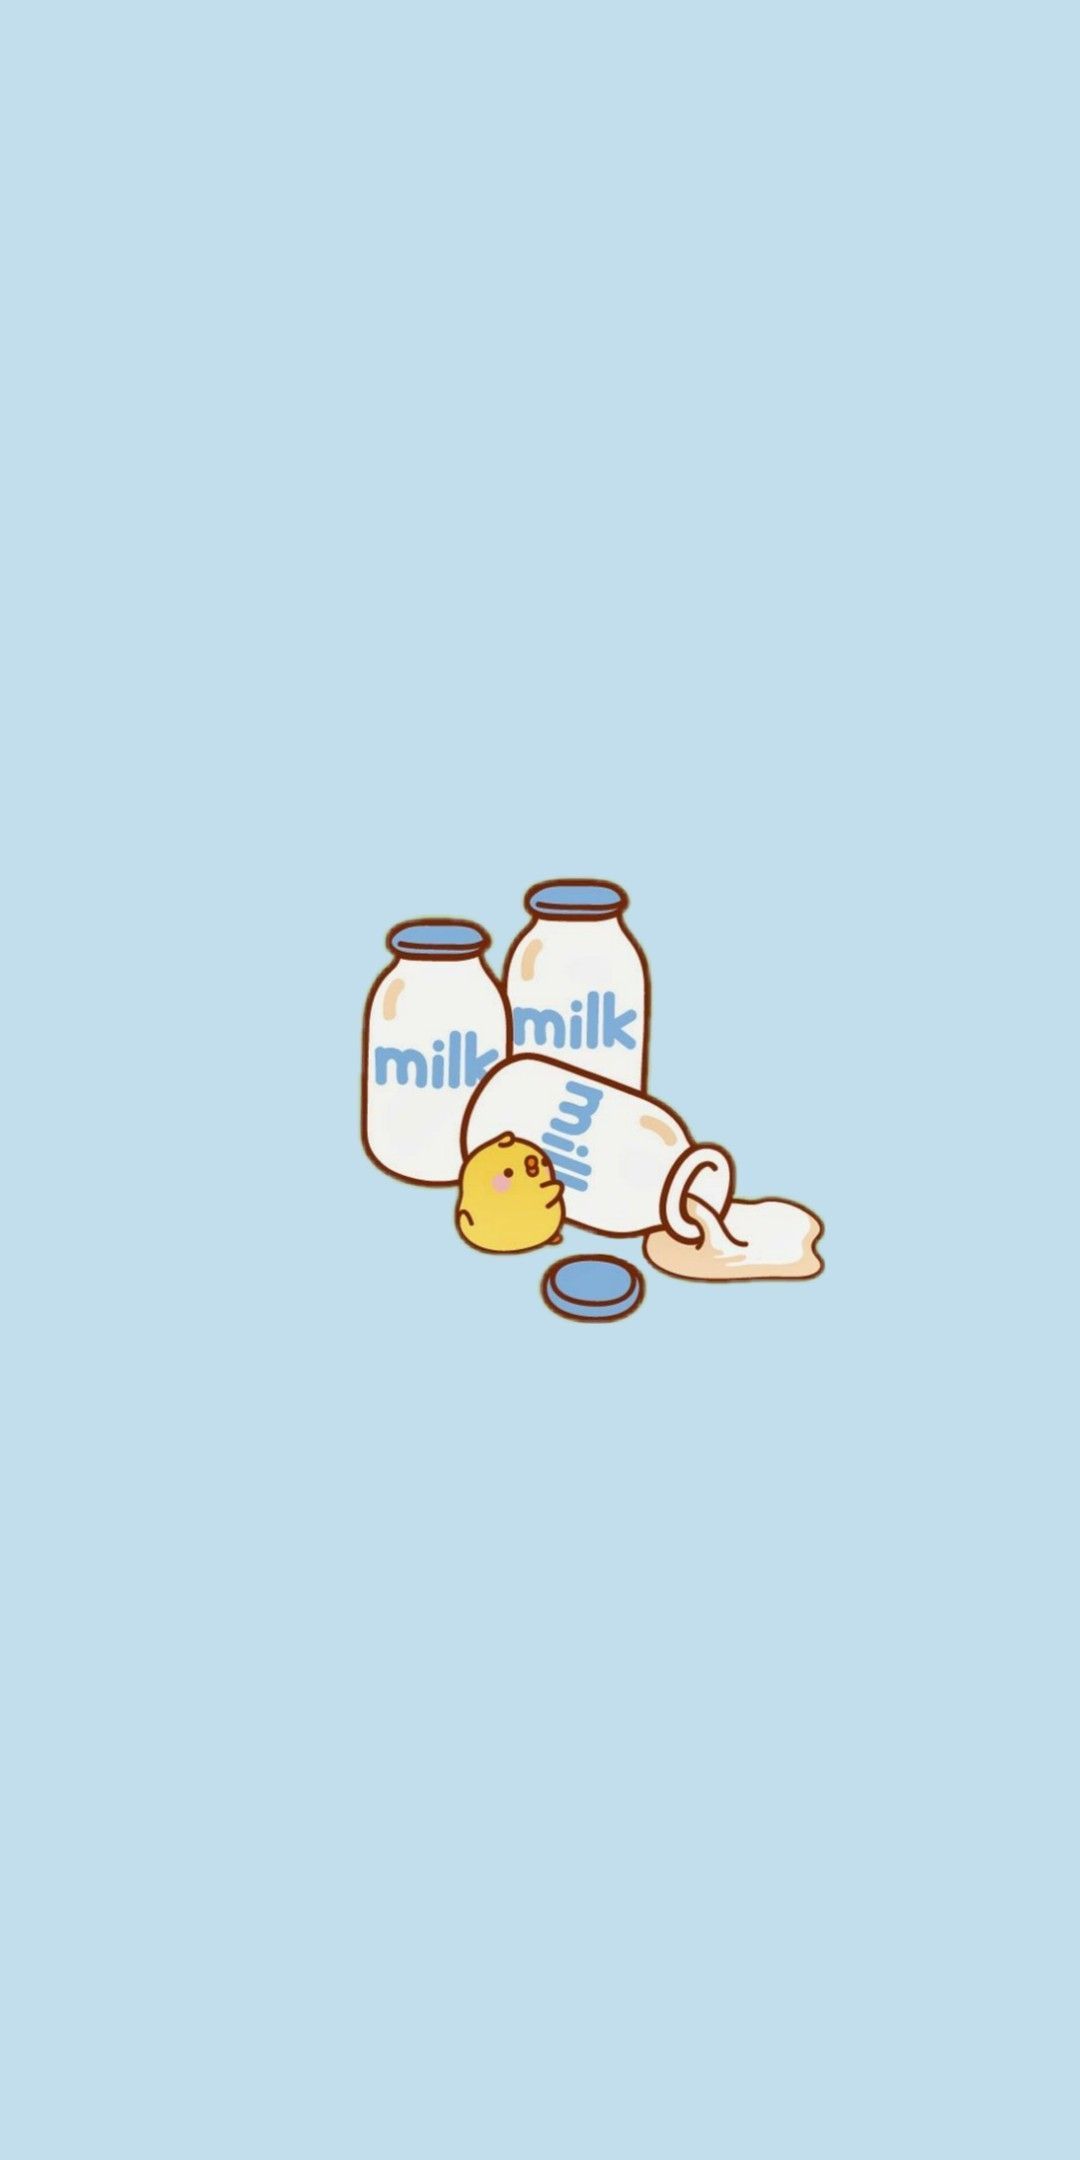 Cute Milk. iPhone wallpaper kawaii, Cute pastel wallpaper, Baby blue wallpaper